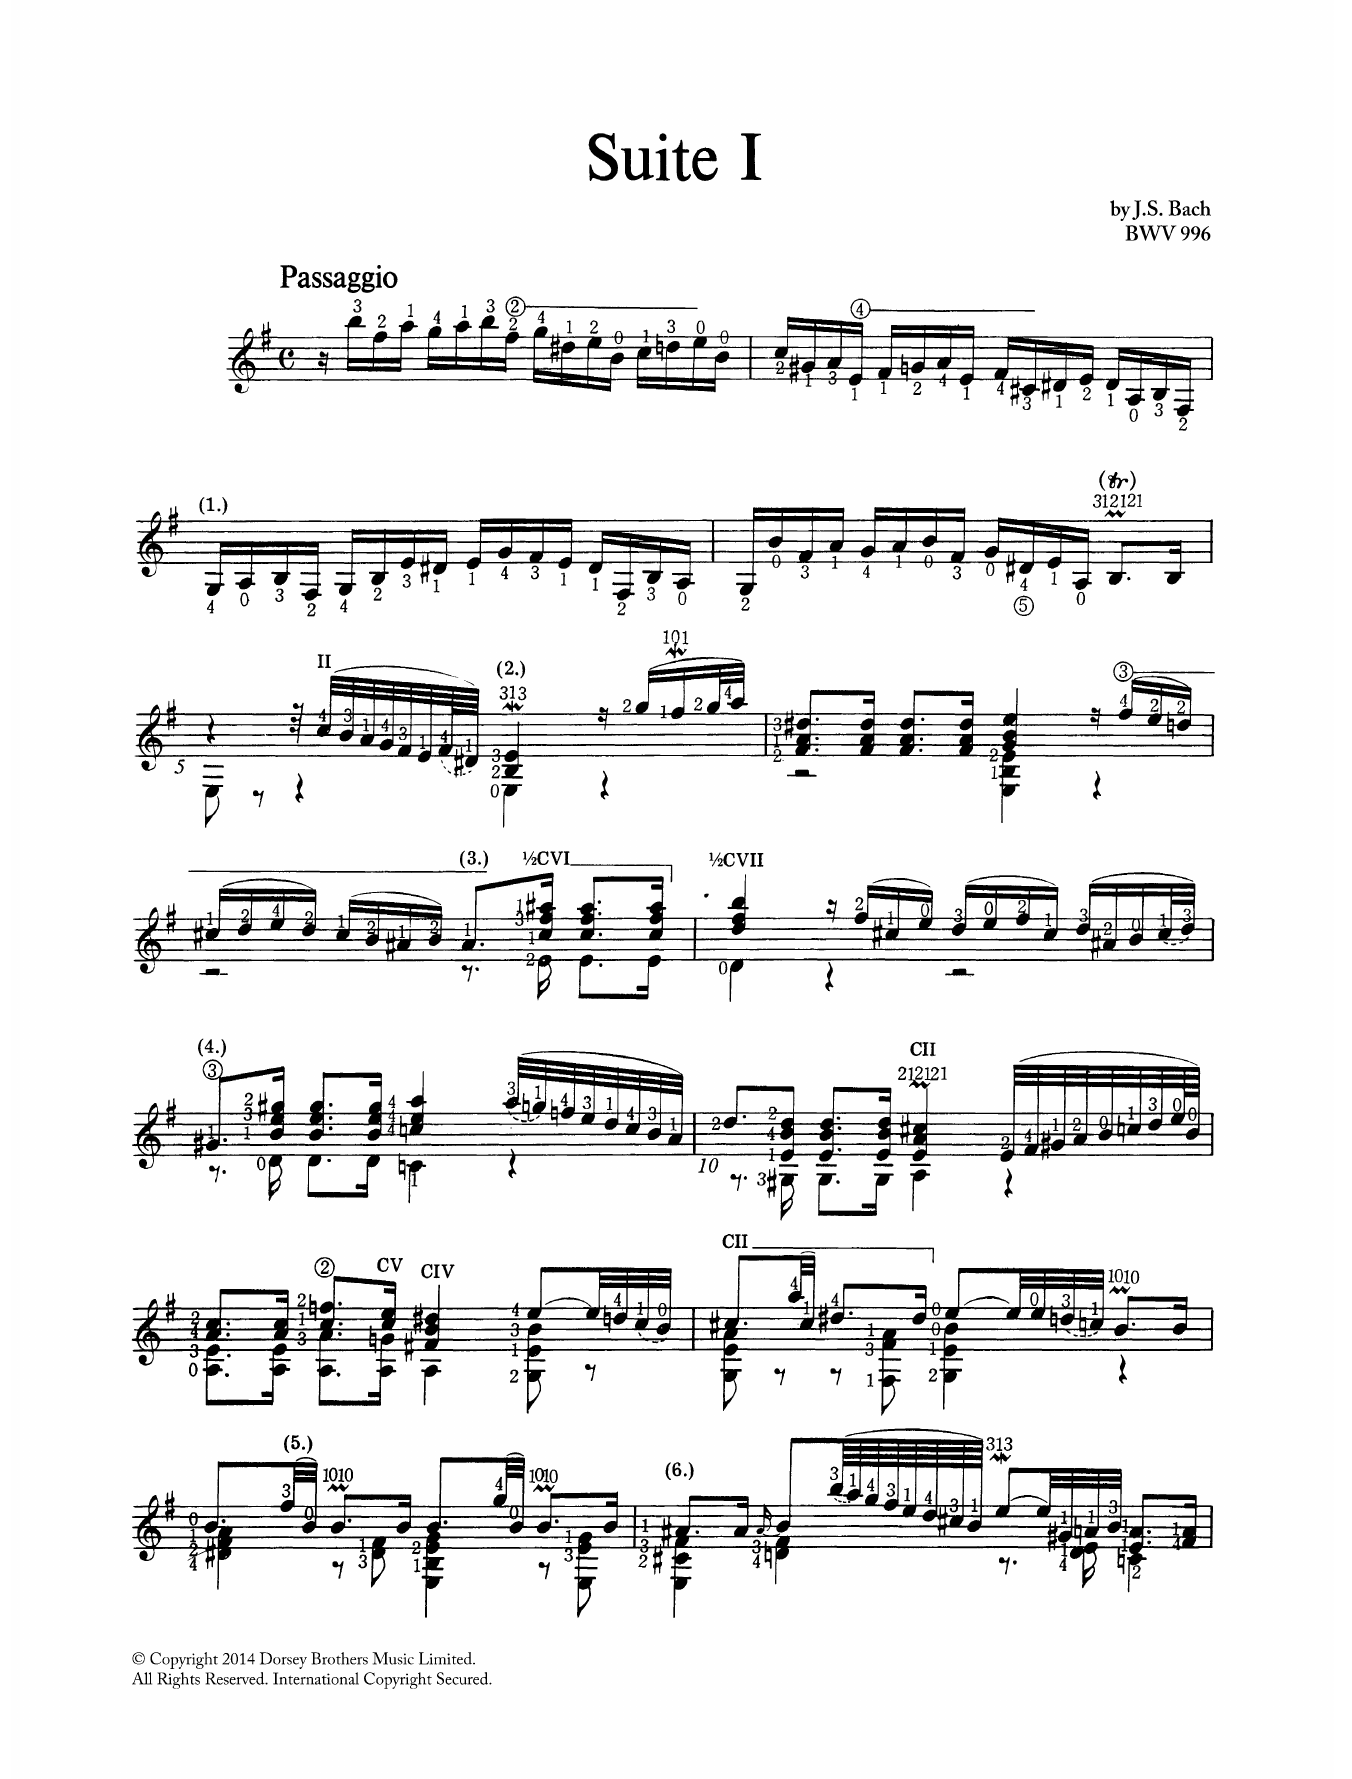 Johann Sebastian Bach Suite In E Minor BWV 996 Sheet Music Notes & Chords for Guitar Tab Play-Along - Download or Print PDF